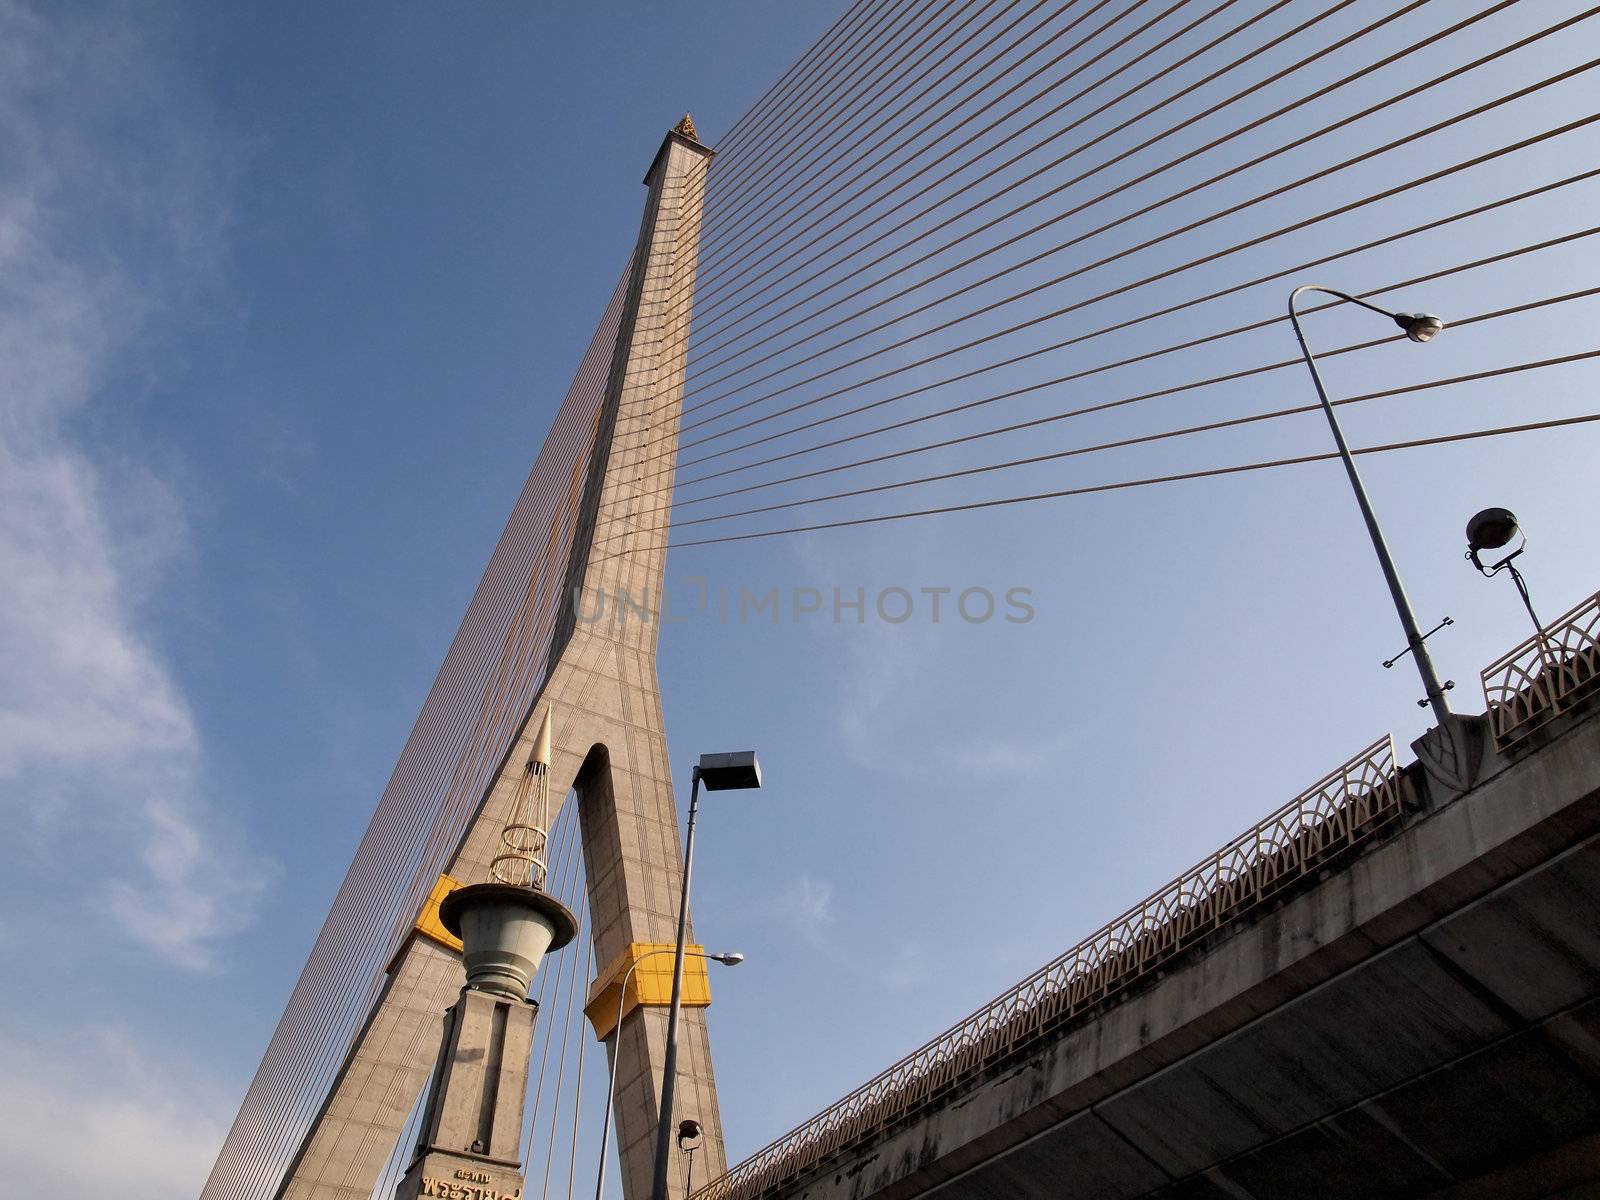 Mega sling Bridge,Rama 8, in bangkok Thailand
The bridge is shown a powerful, strong, giant  